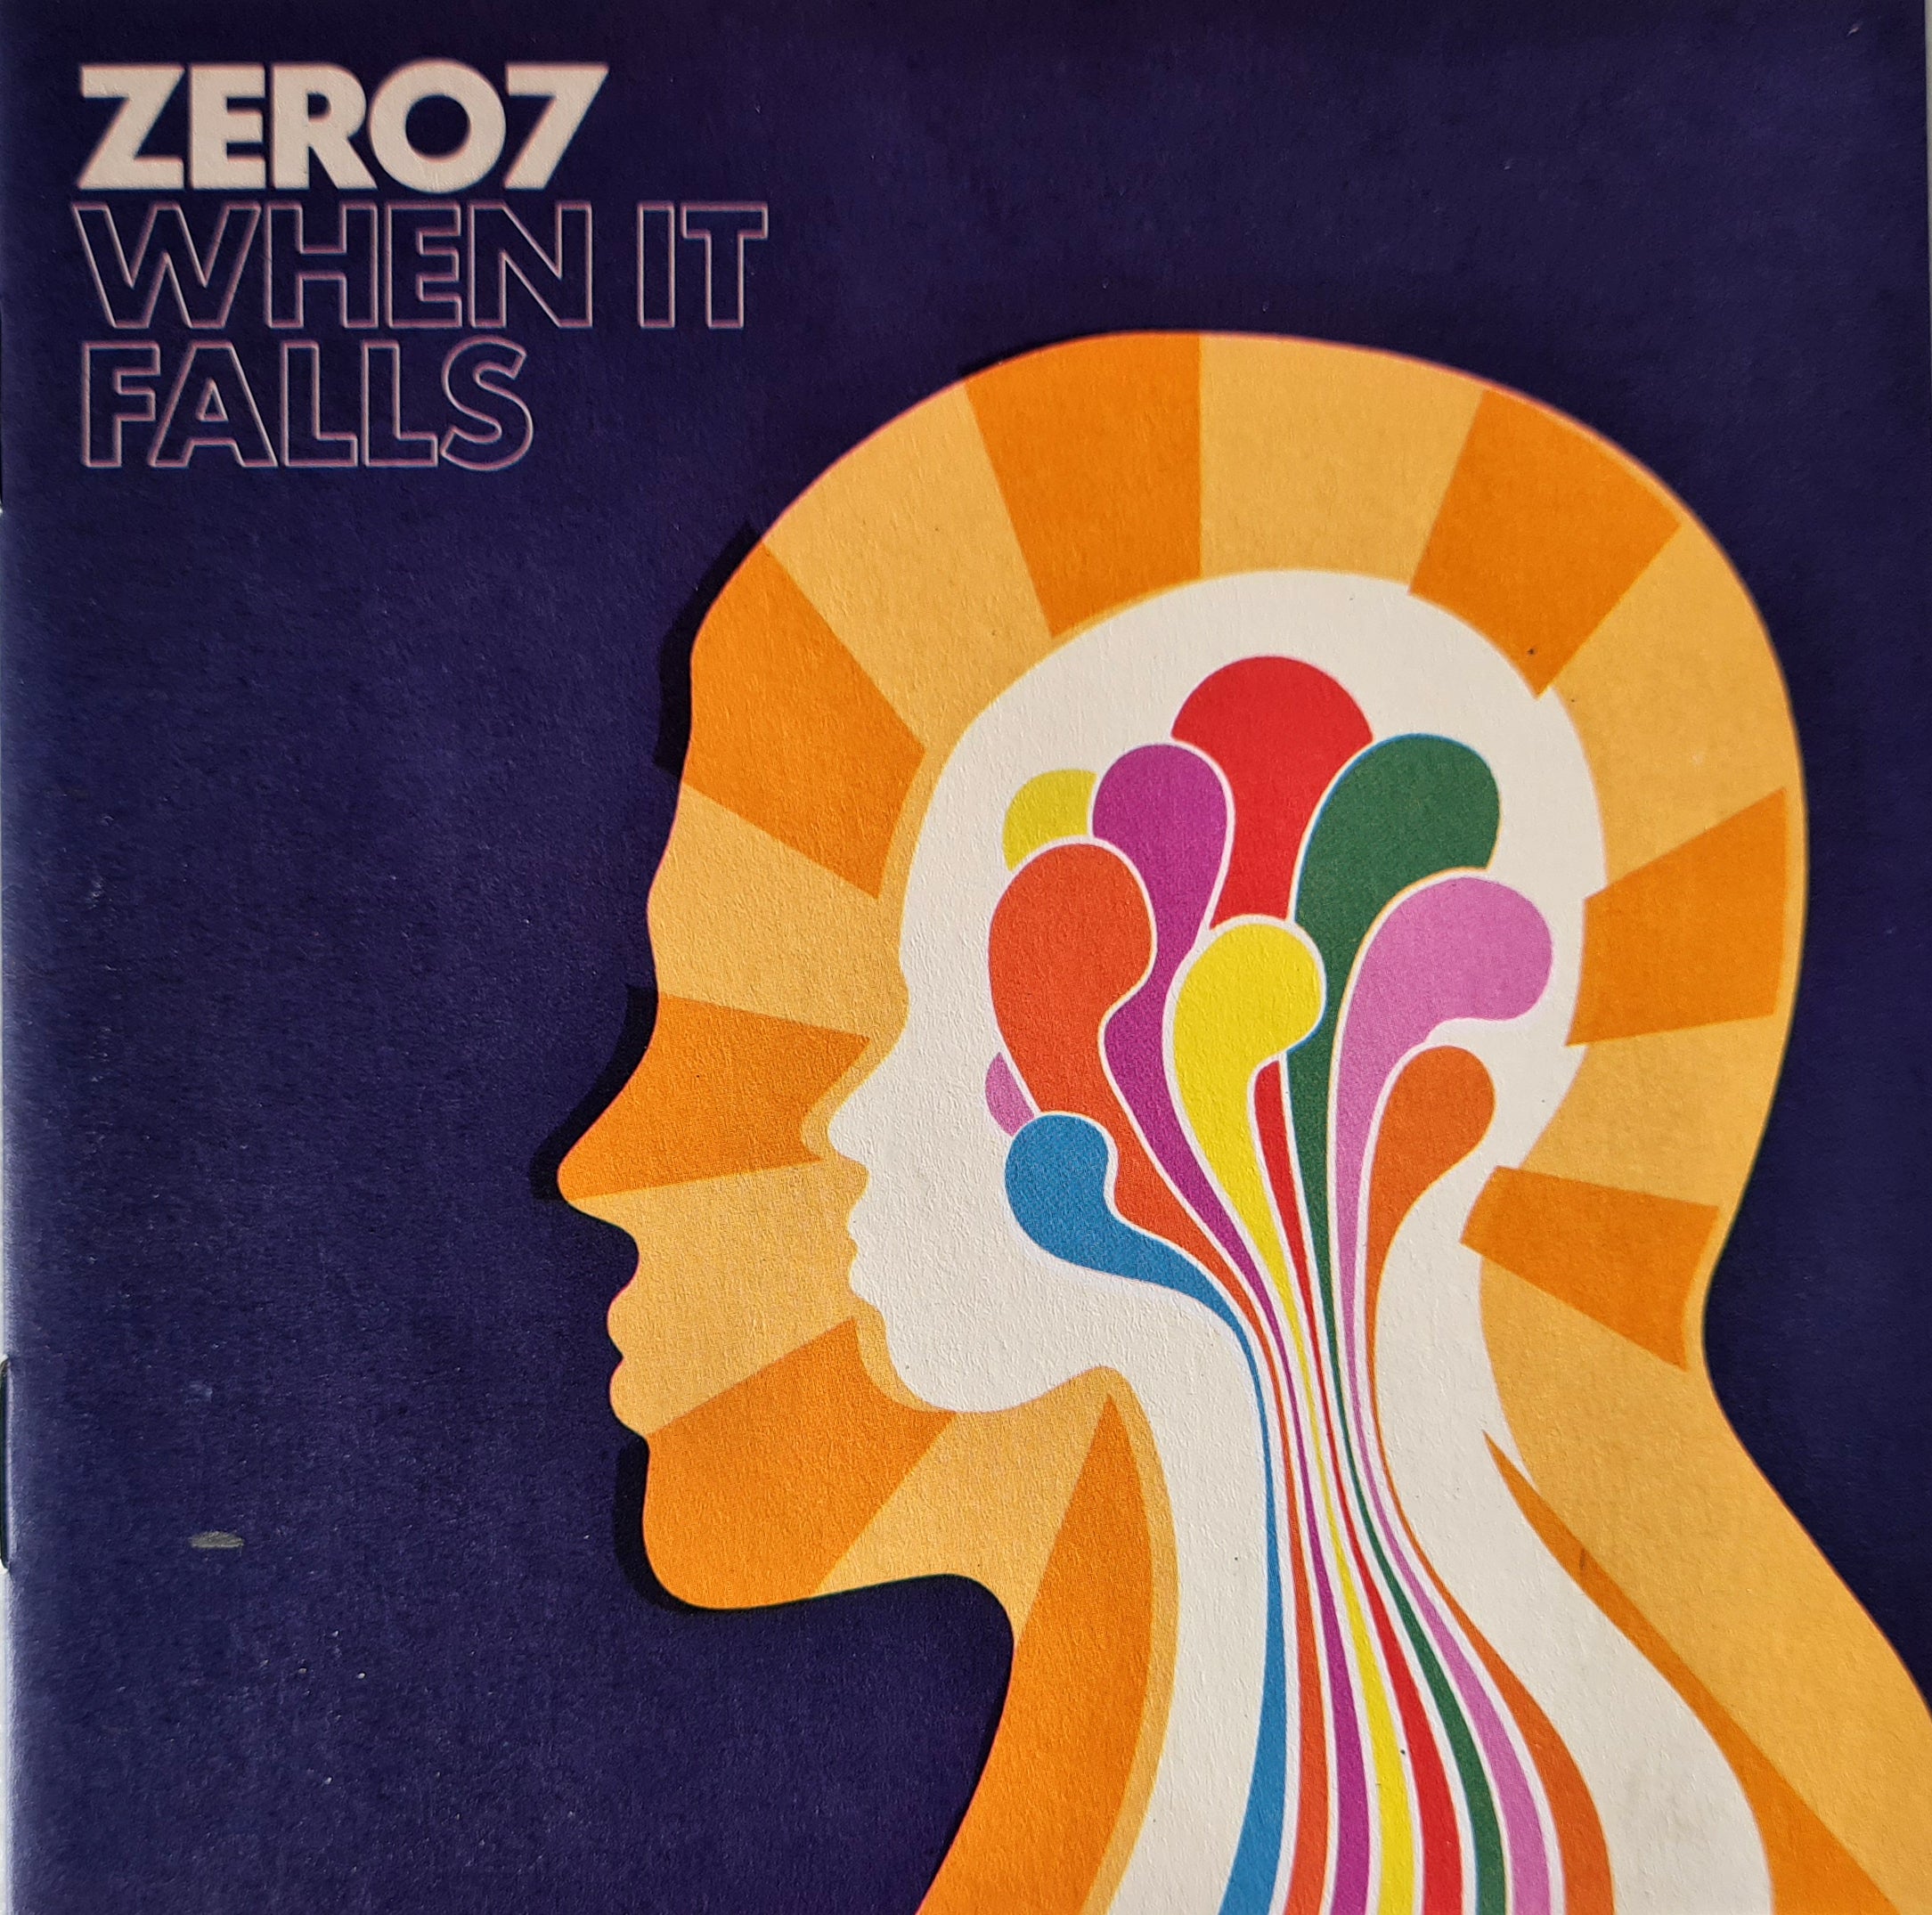 Zero7 - When it Falls (CD)